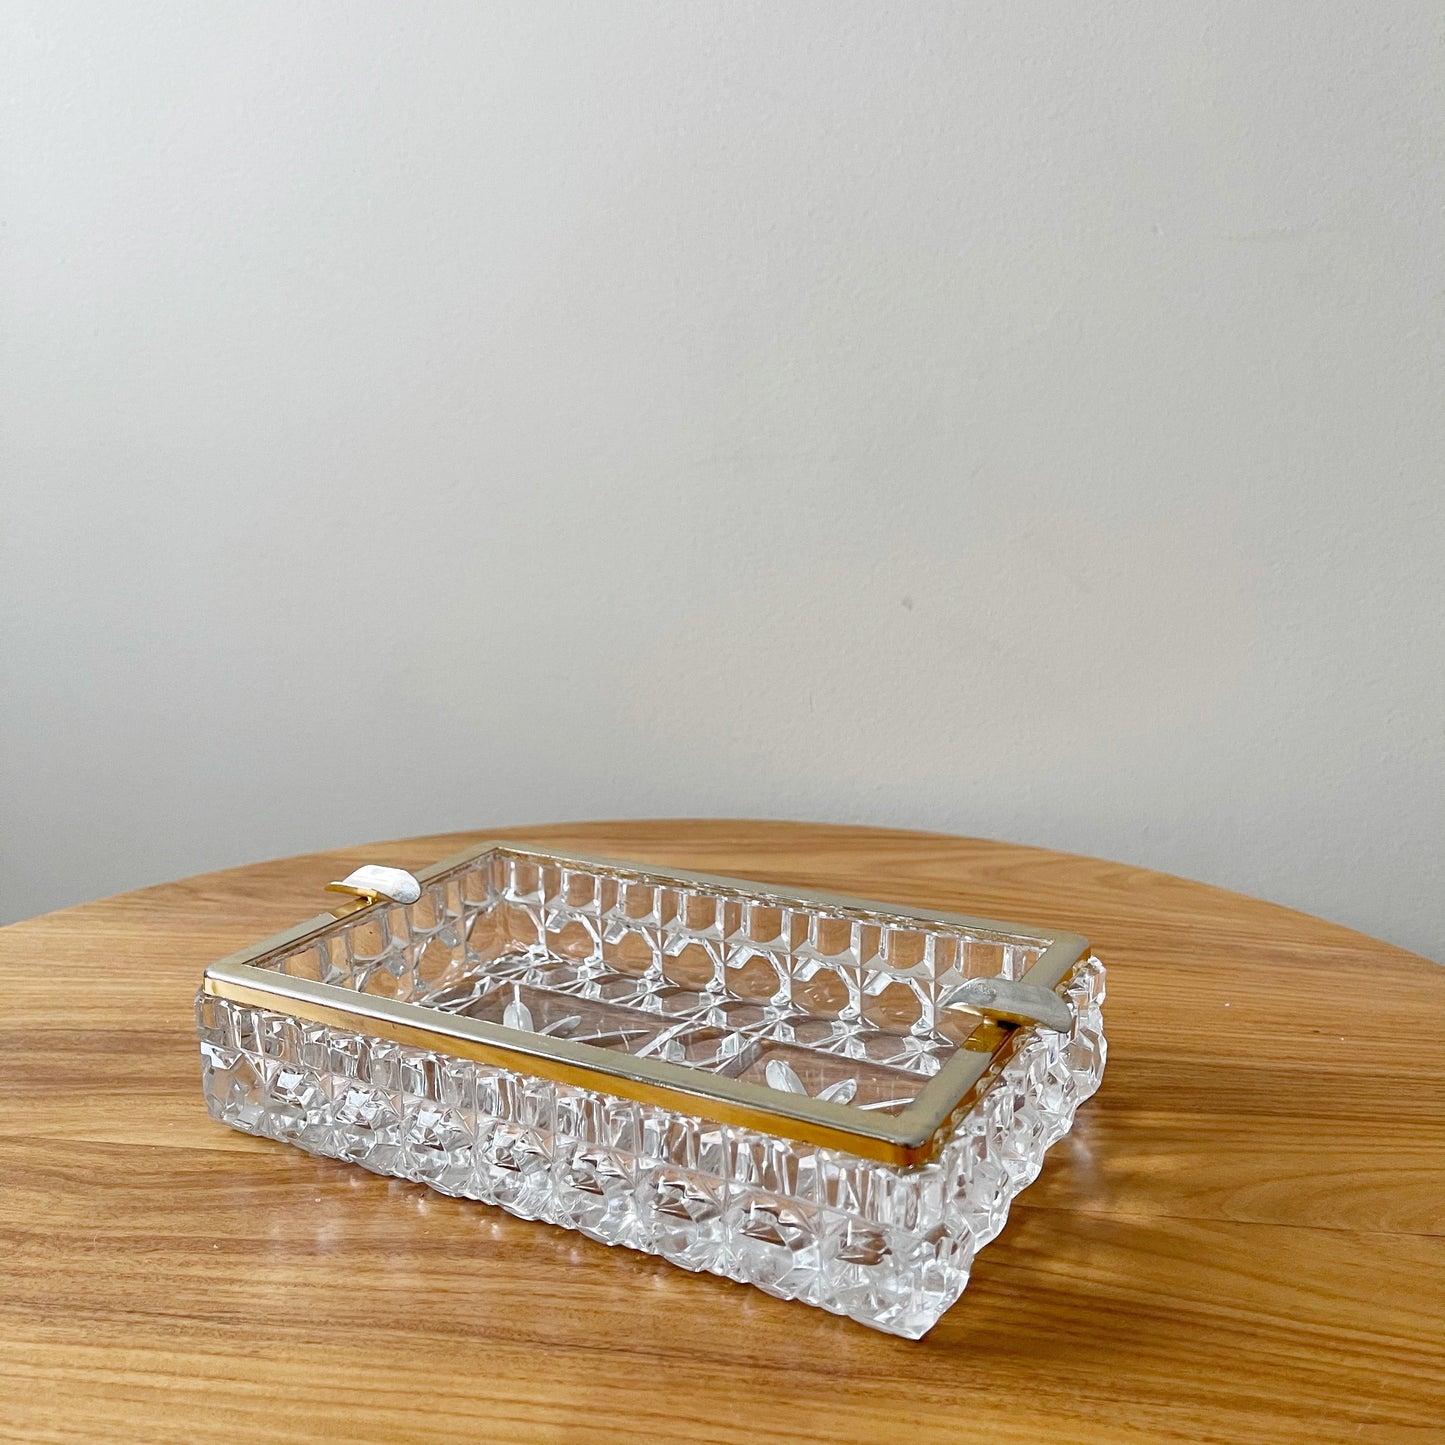 Vintage Crystal Glass Ashtray/Catchall